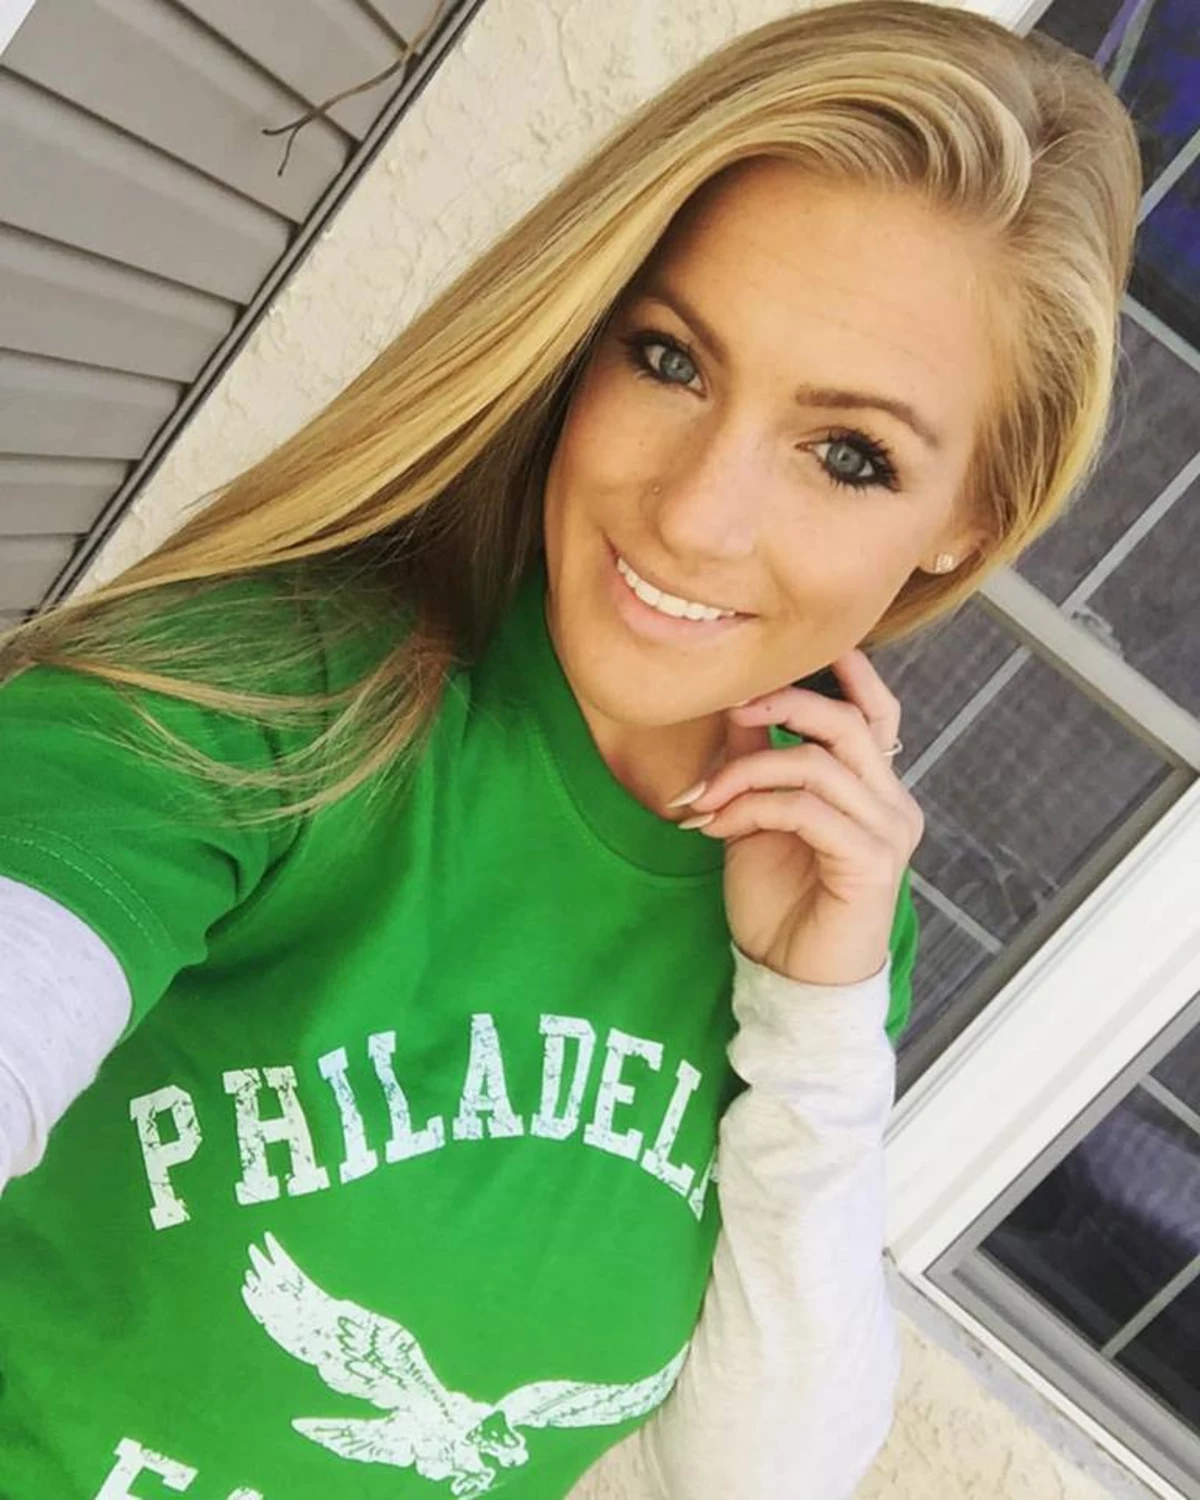 Female Friday: Hot blonde Philadelphia Eagles fan shows off her